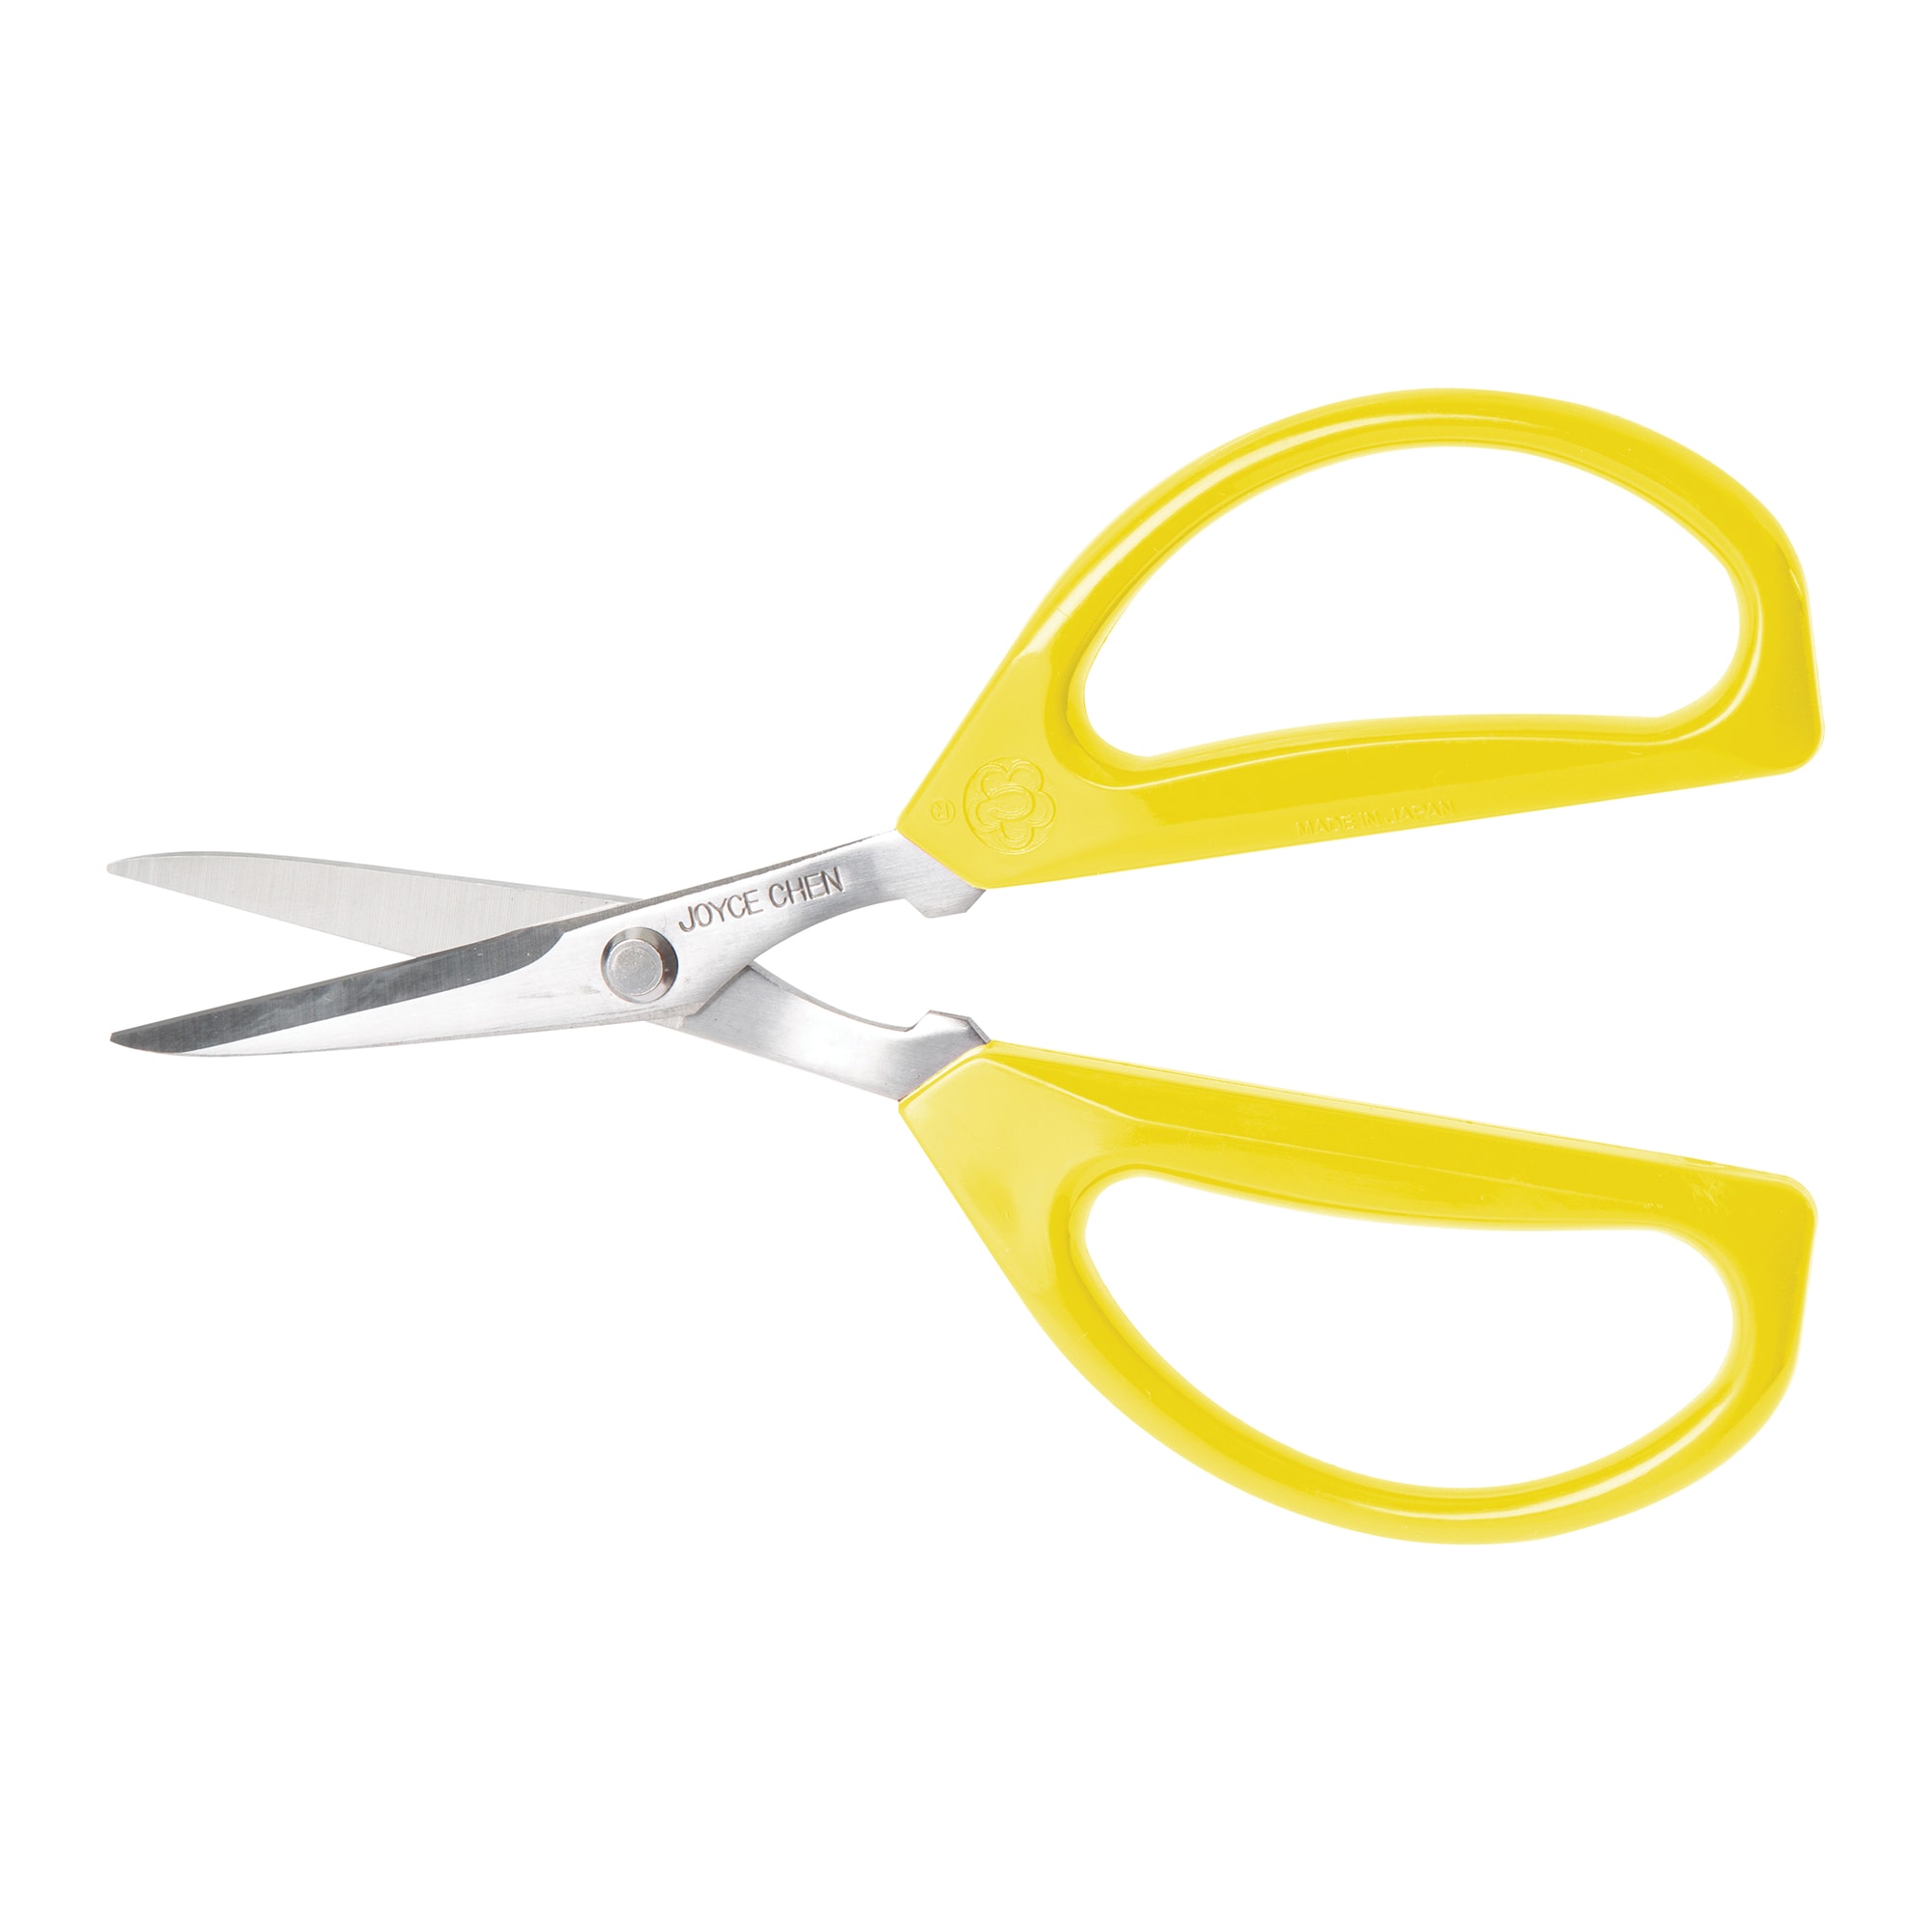 Stalwart 1.75-in Stainless Steel Straight Scissors in the Scissors